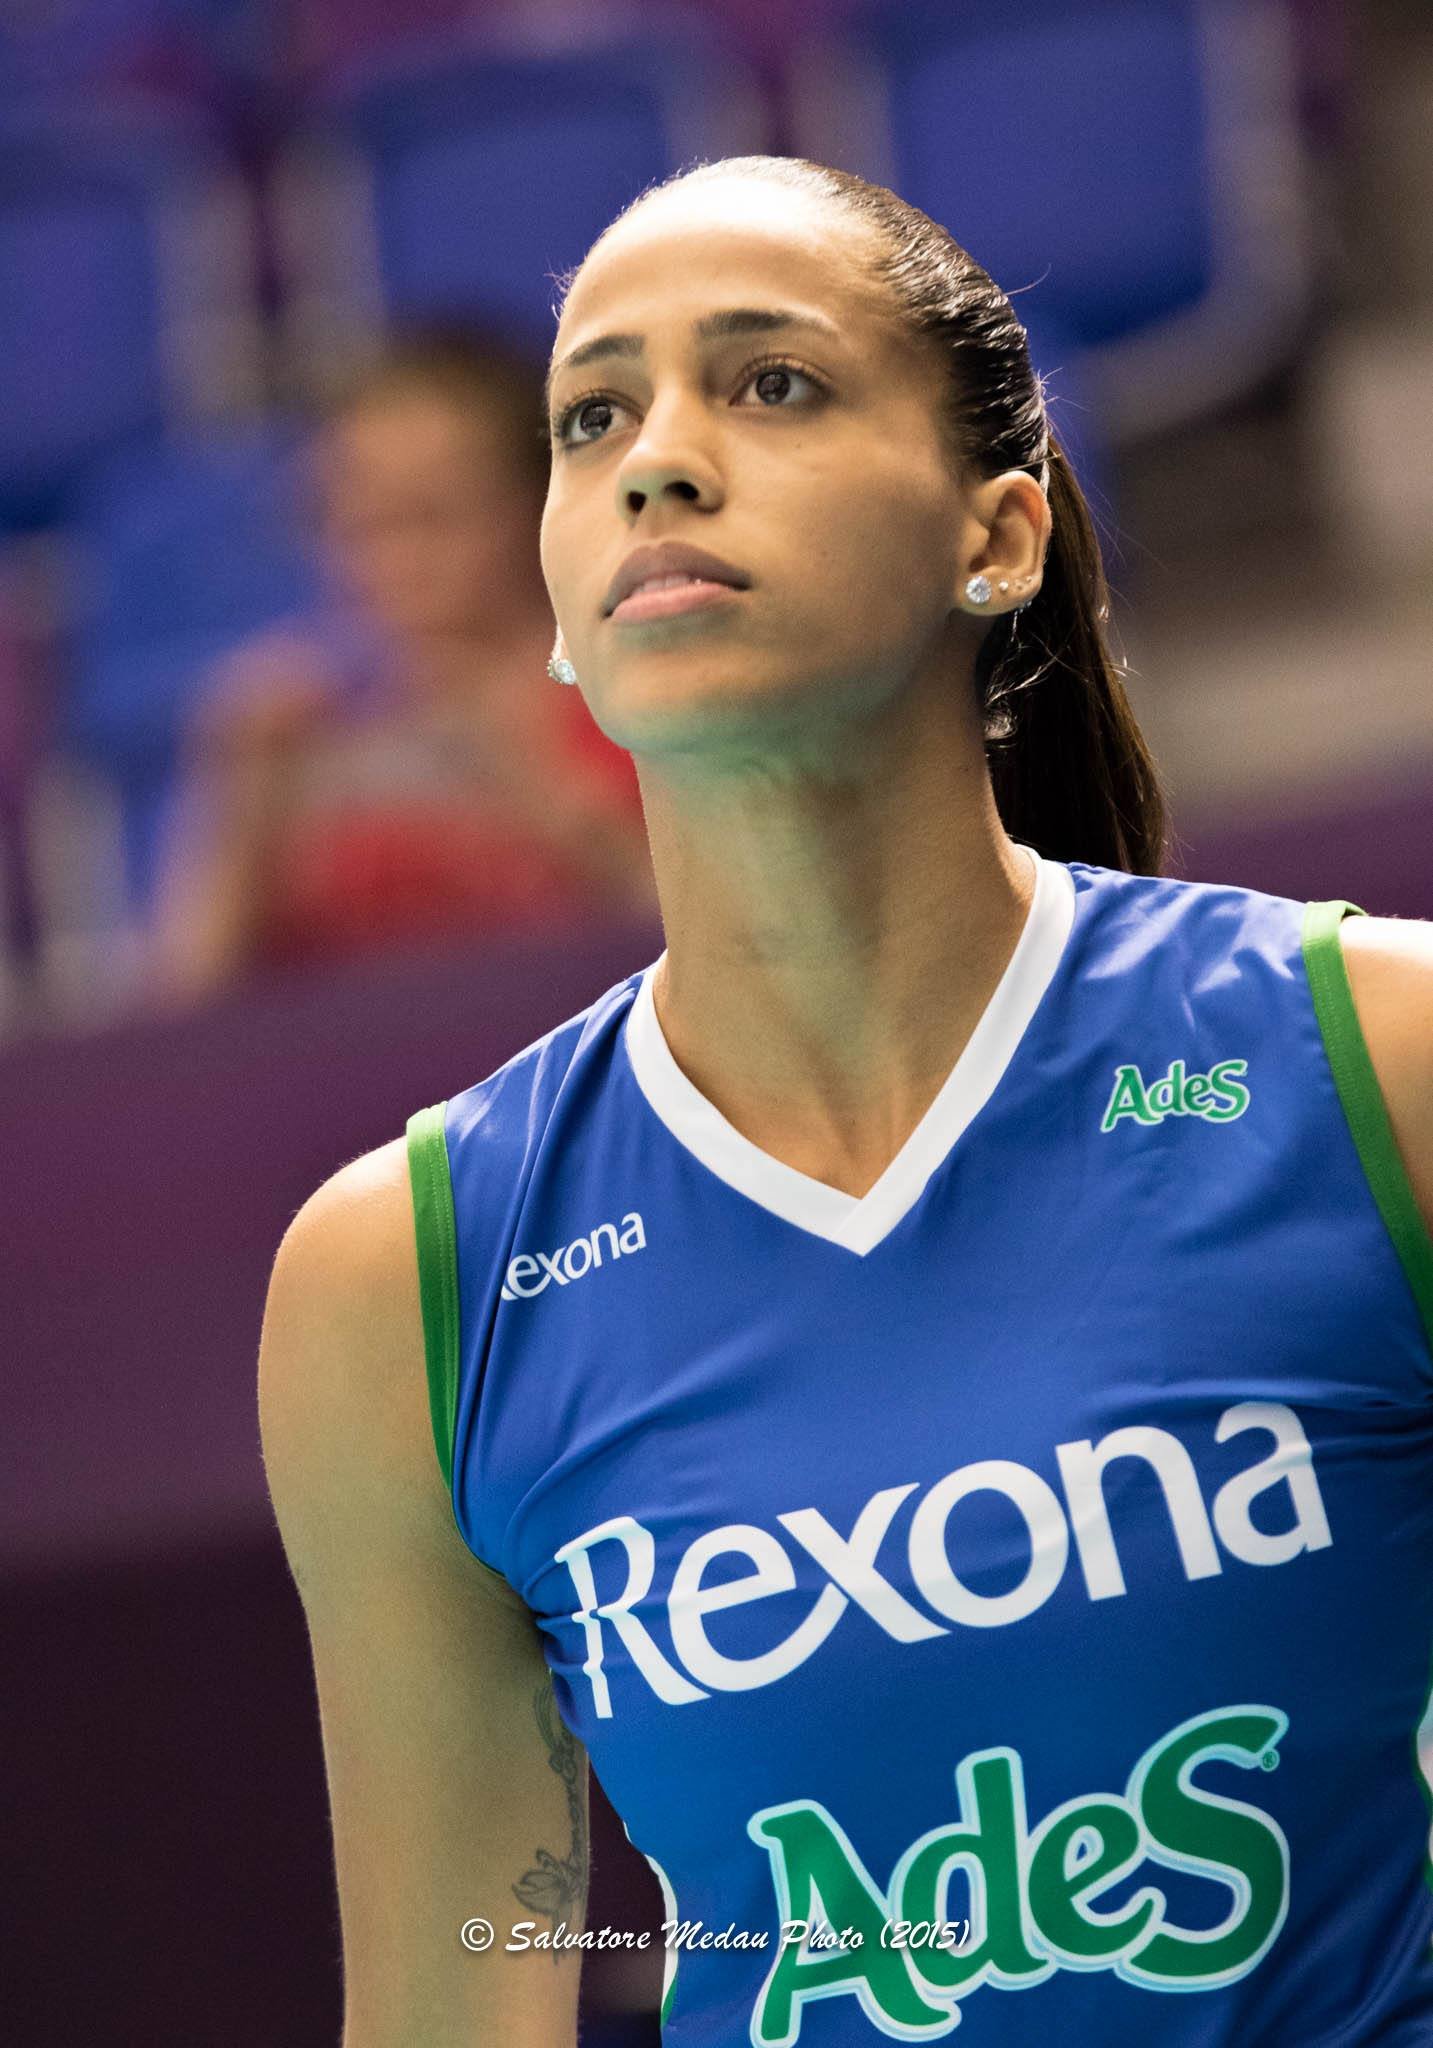 Mayhara Silva